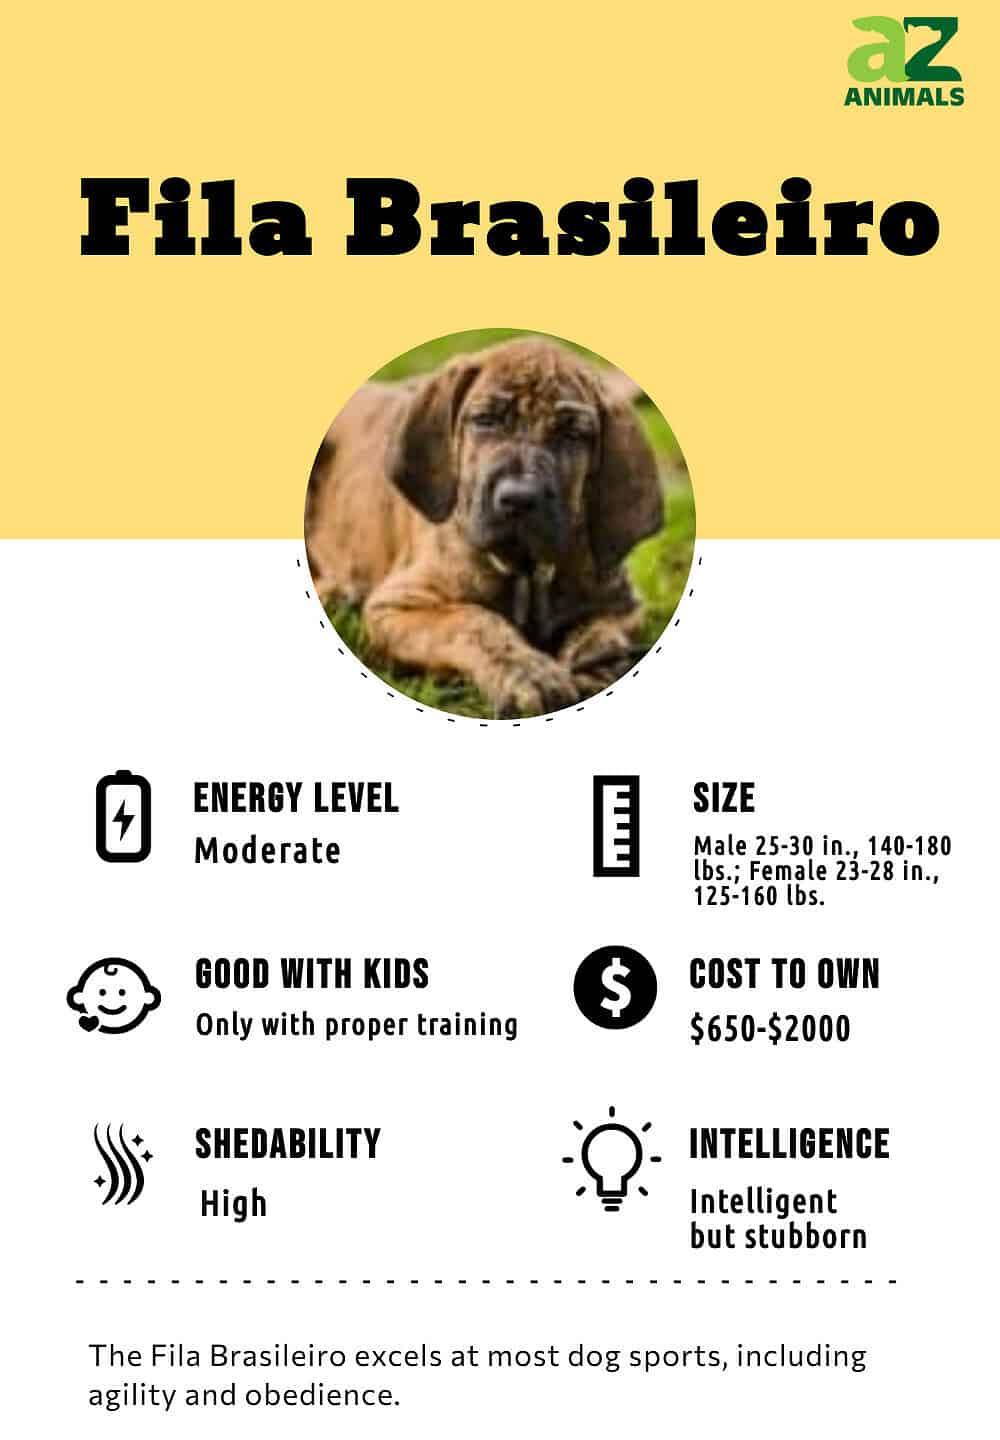 Discover the fascinating Fila Brasileiro breed